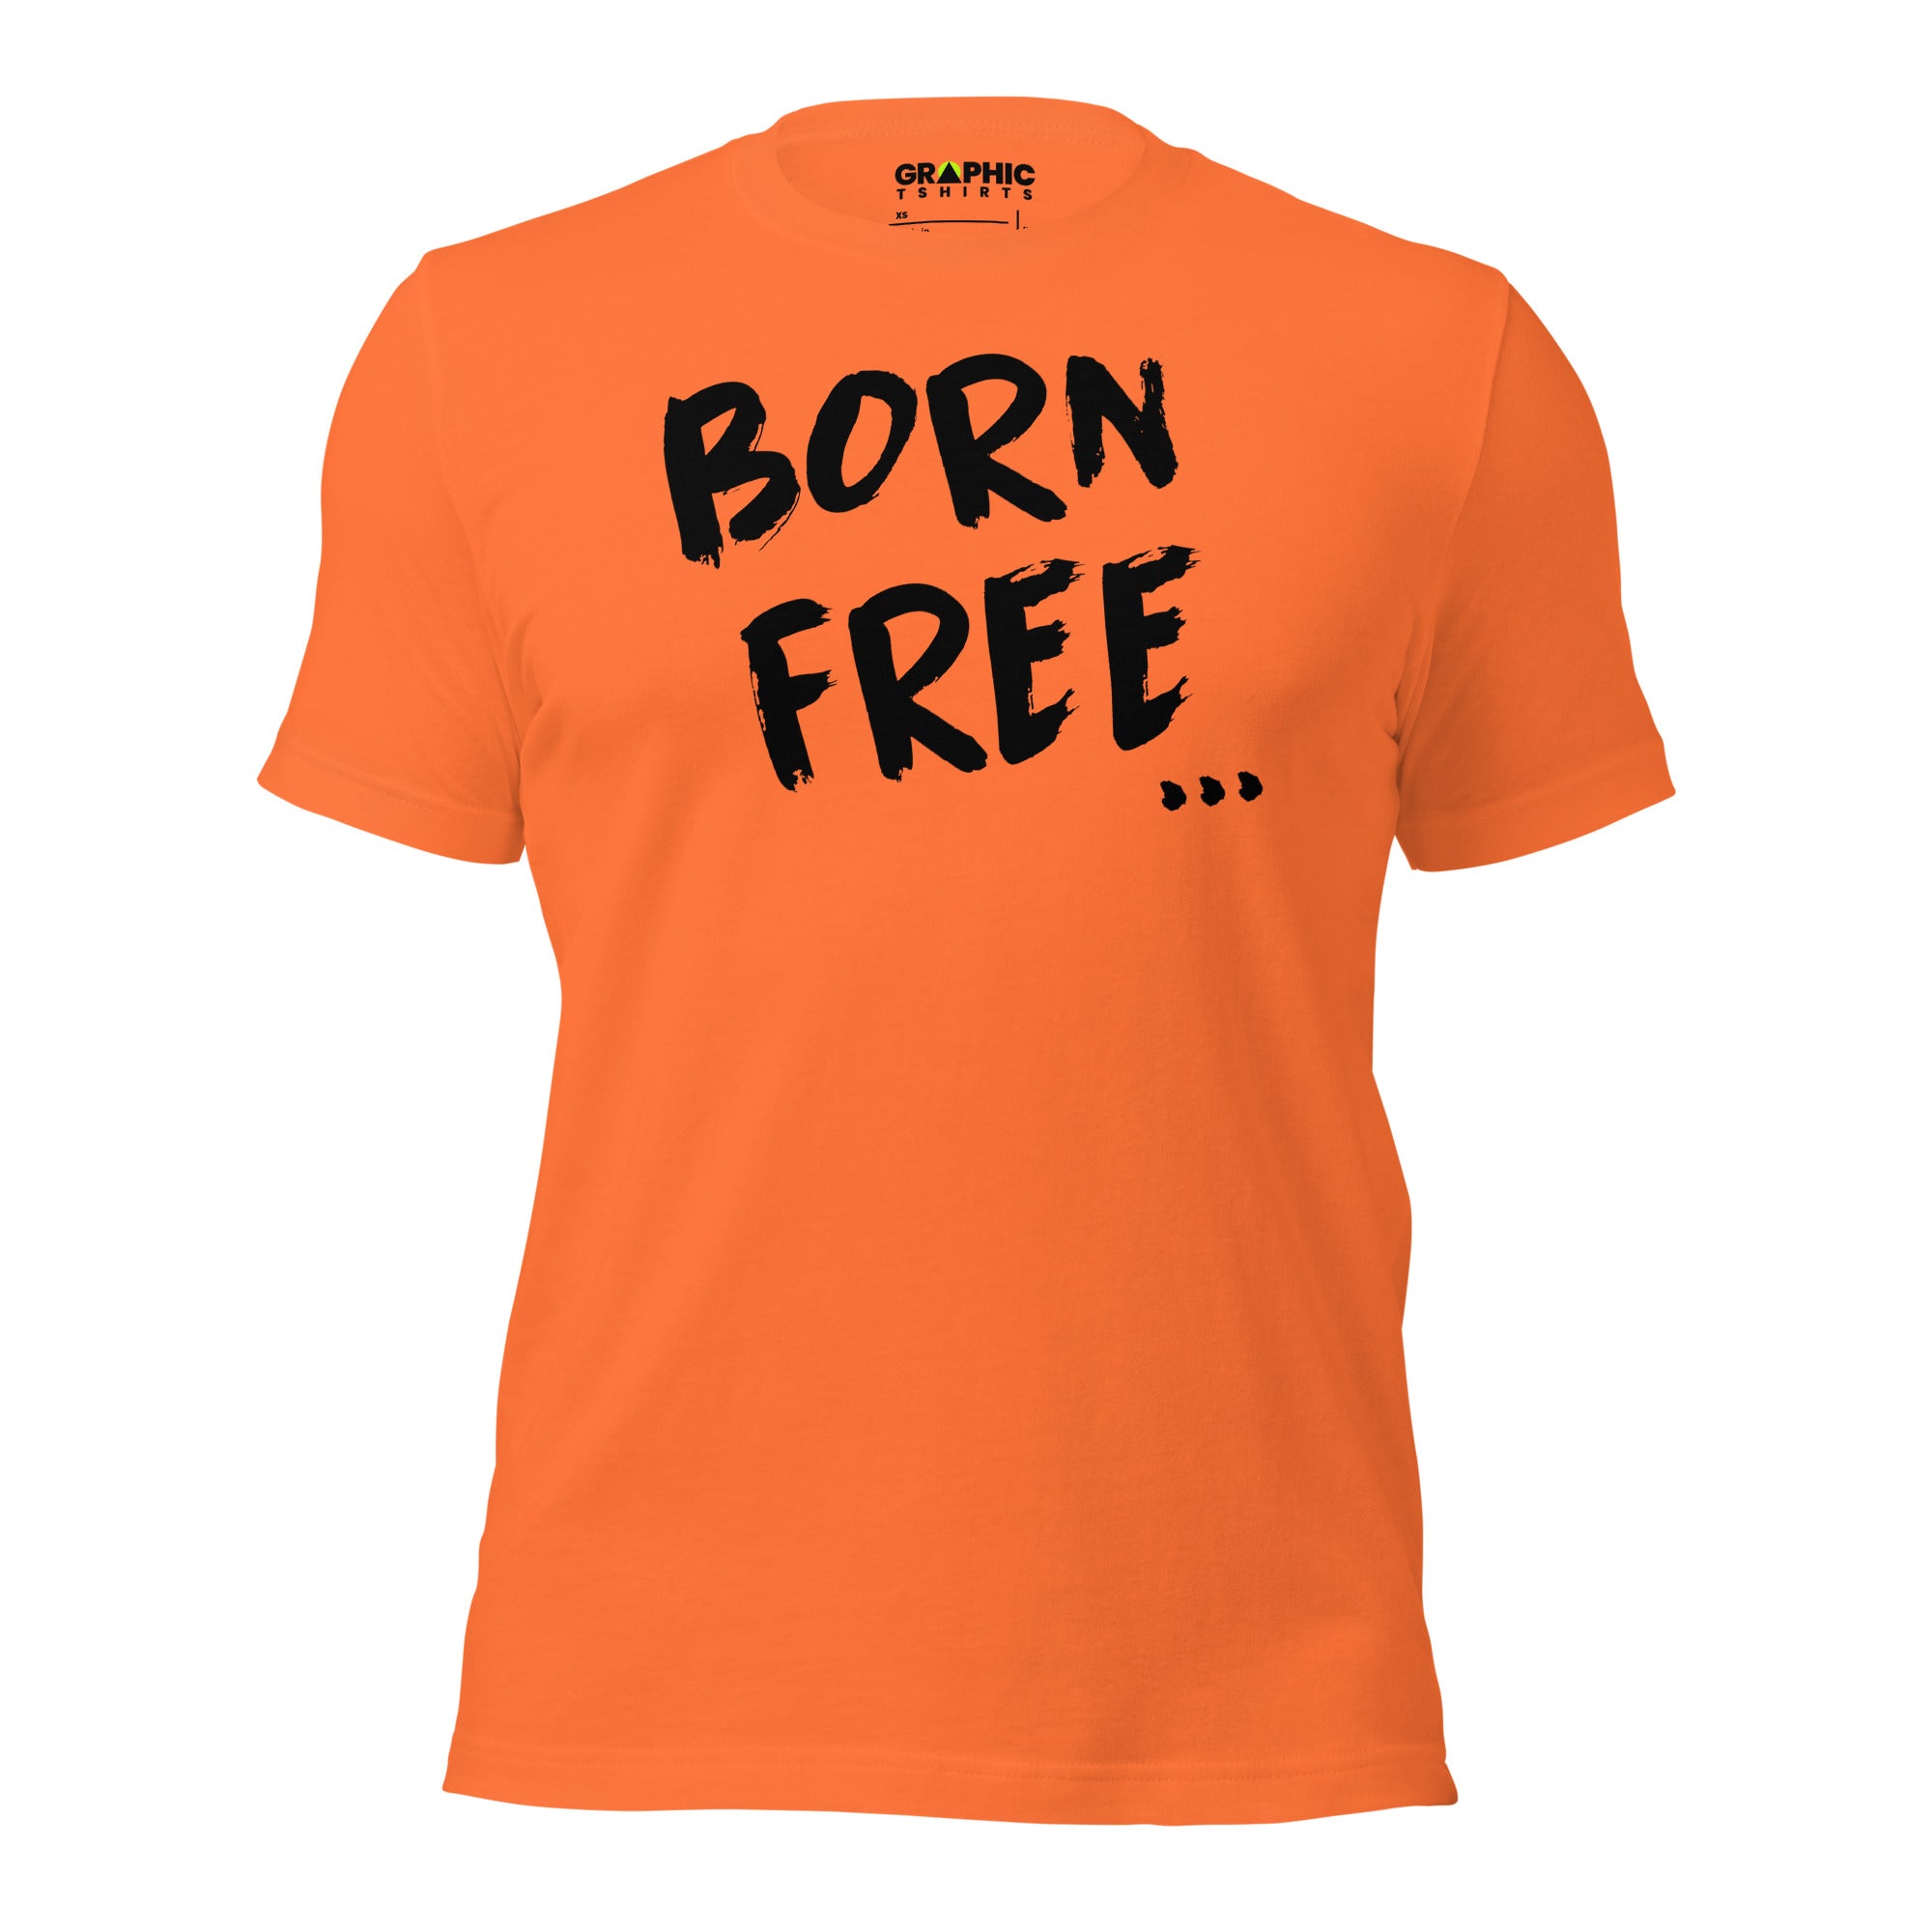 Unisex Crew Neck T-Shirt - Born Free